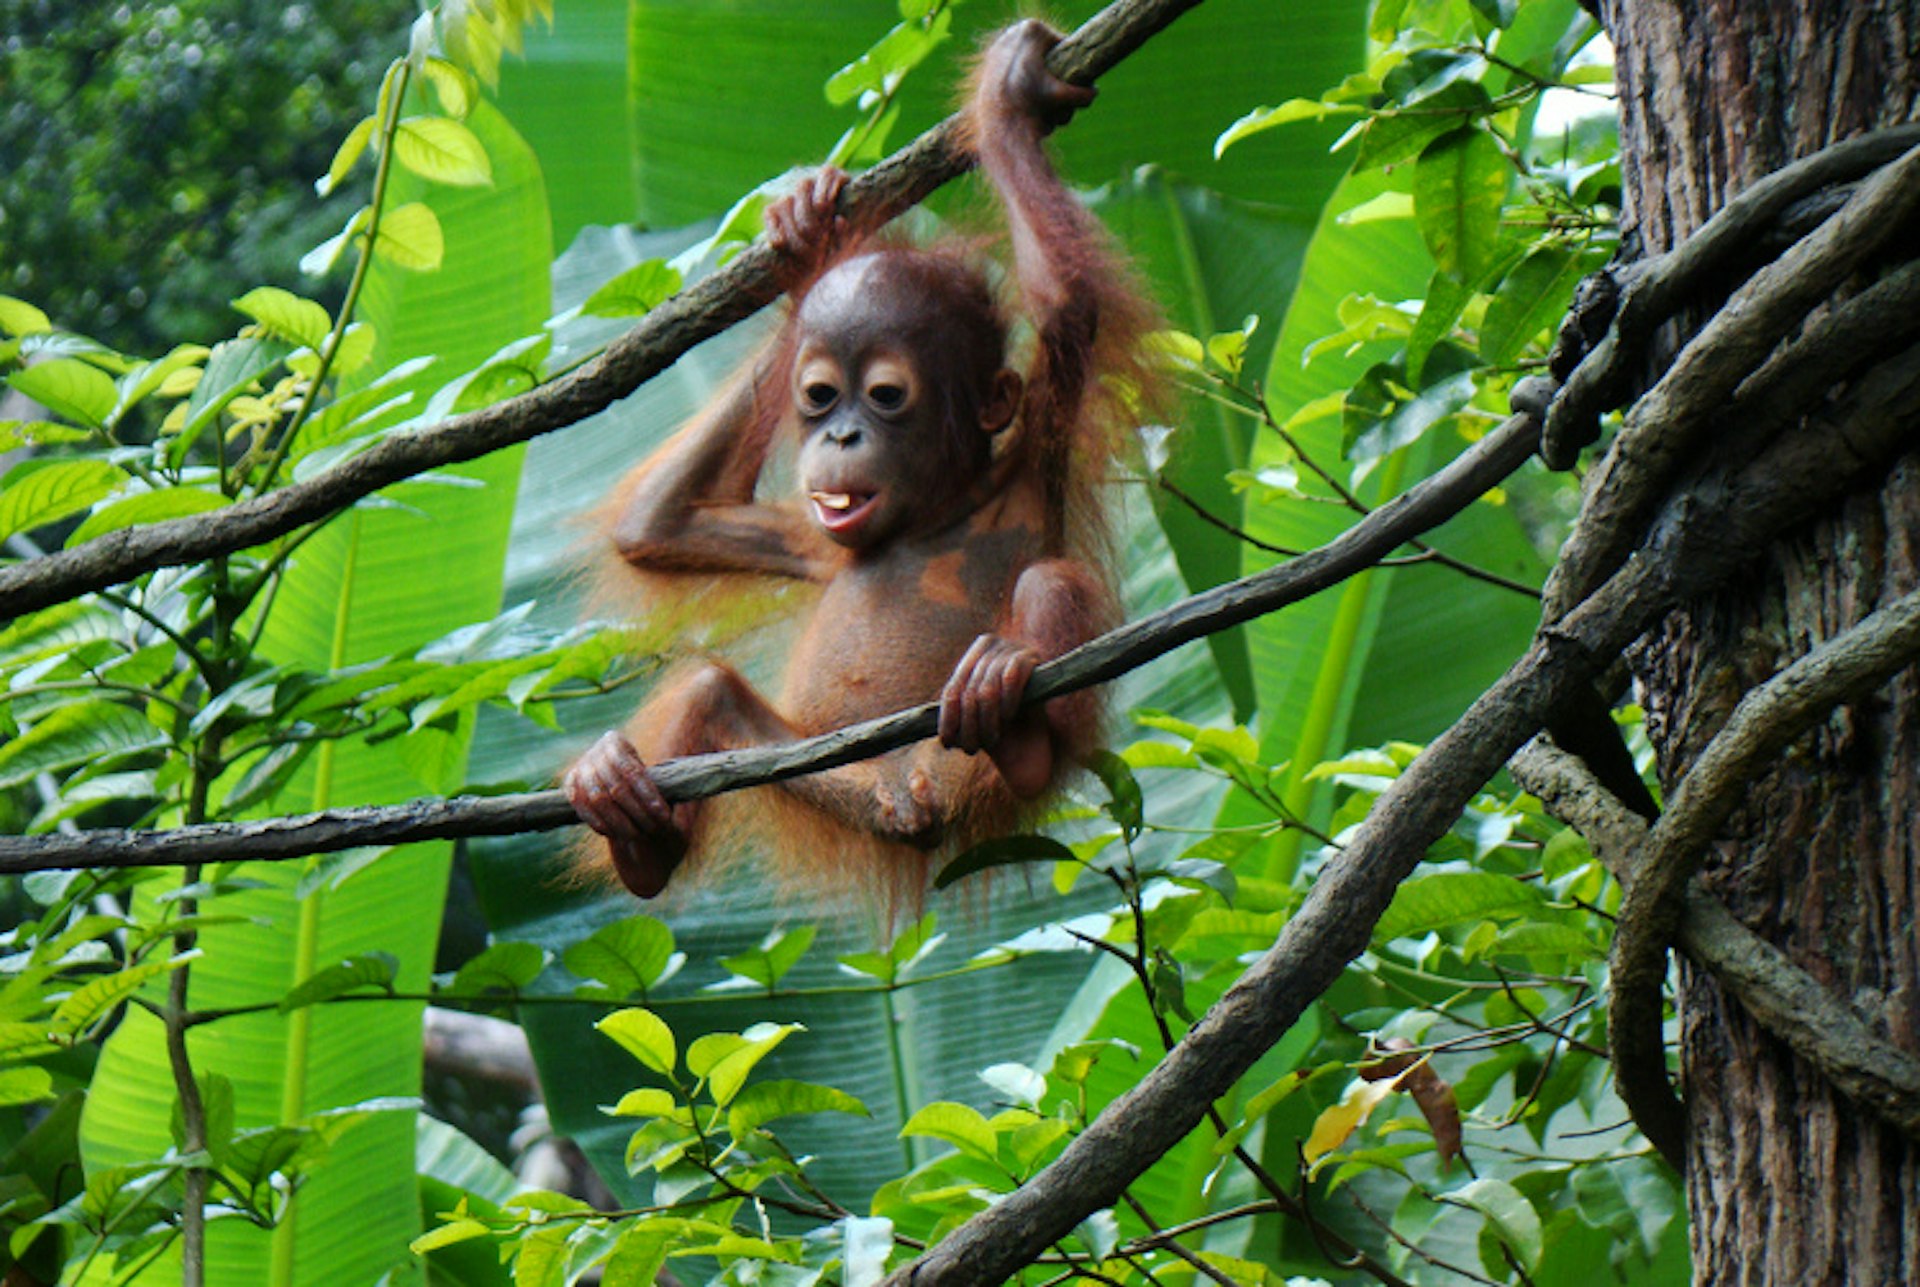 Baby orangutan, Singapore Zoo. Image by Adian Grieg. CC BY 2.0